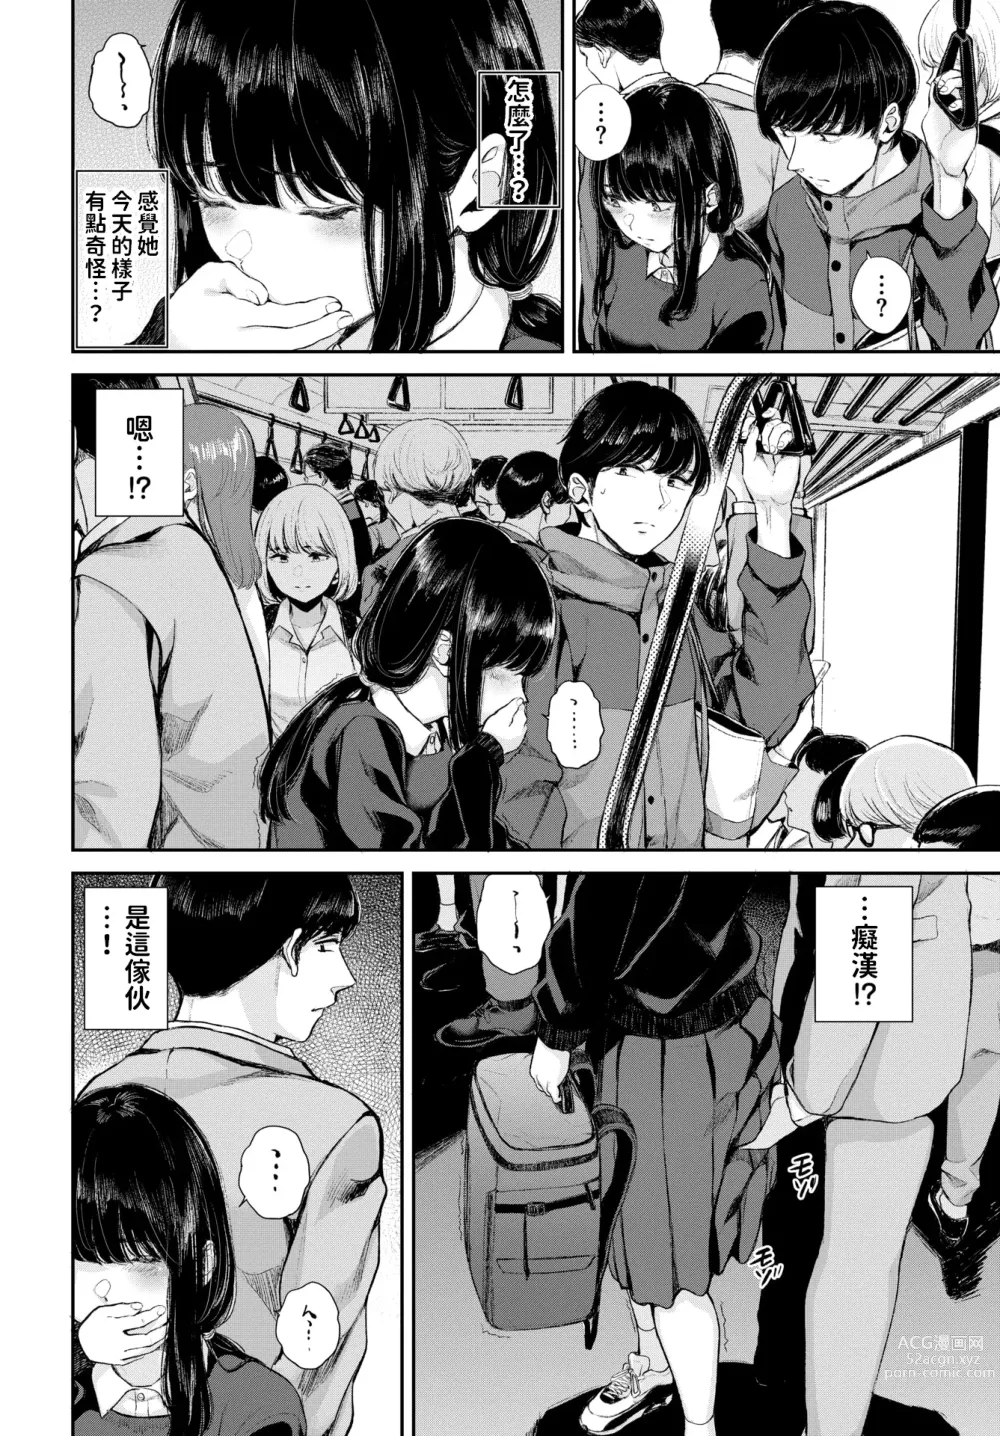 Page 2 of manga Yuki Zuri to Ao - passing by and blue.